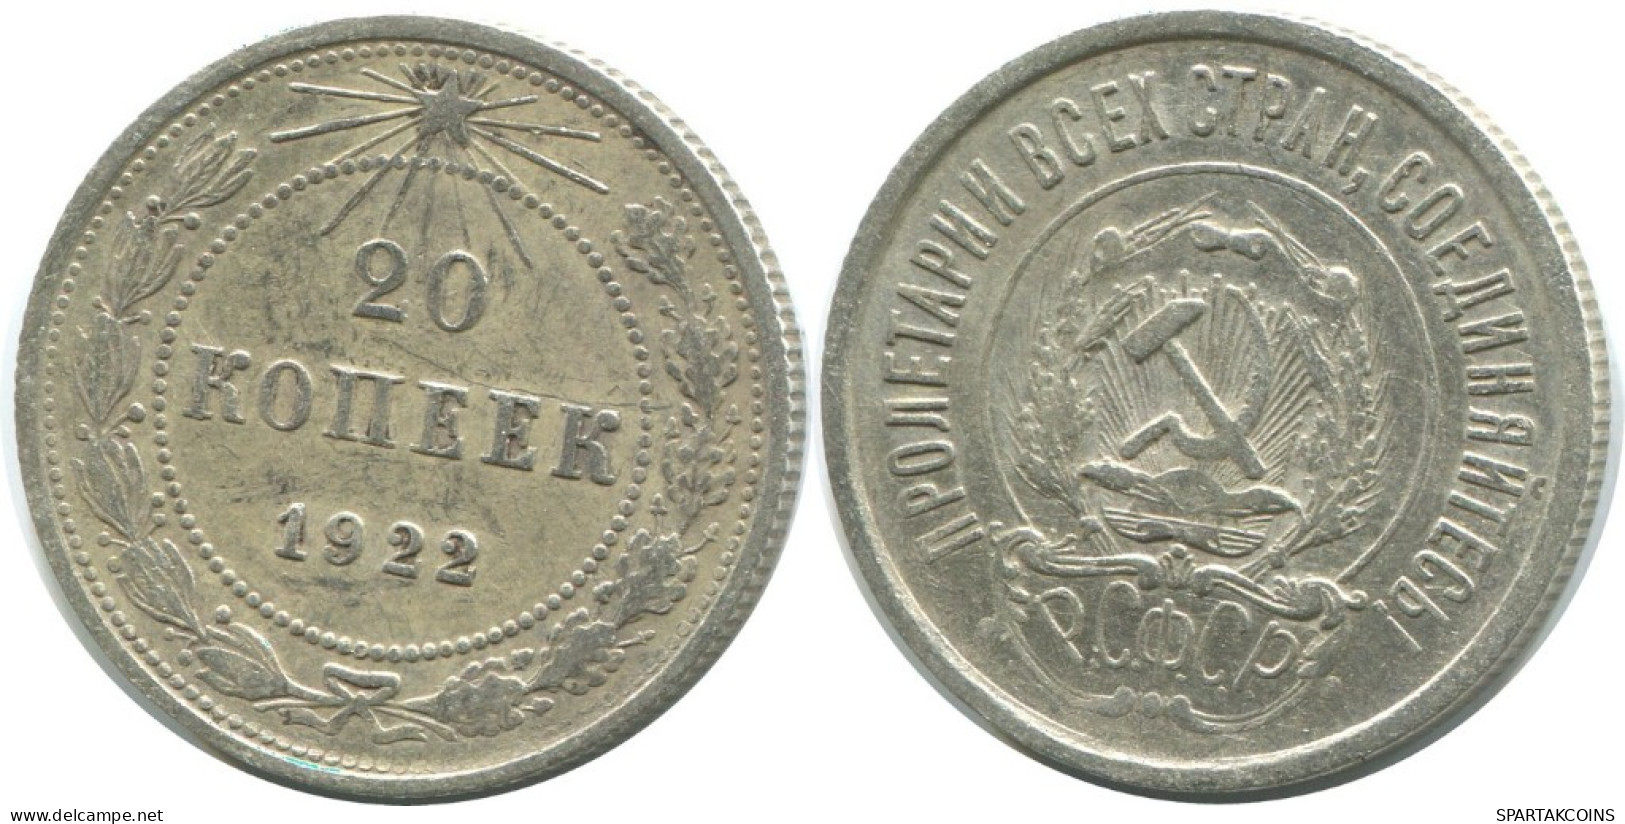 20 KOPEKS 1923 RUSSLAND RUSSIA RSFSR SILBER Münze HIGH GRADE #AF408.4.D.A - Rusland